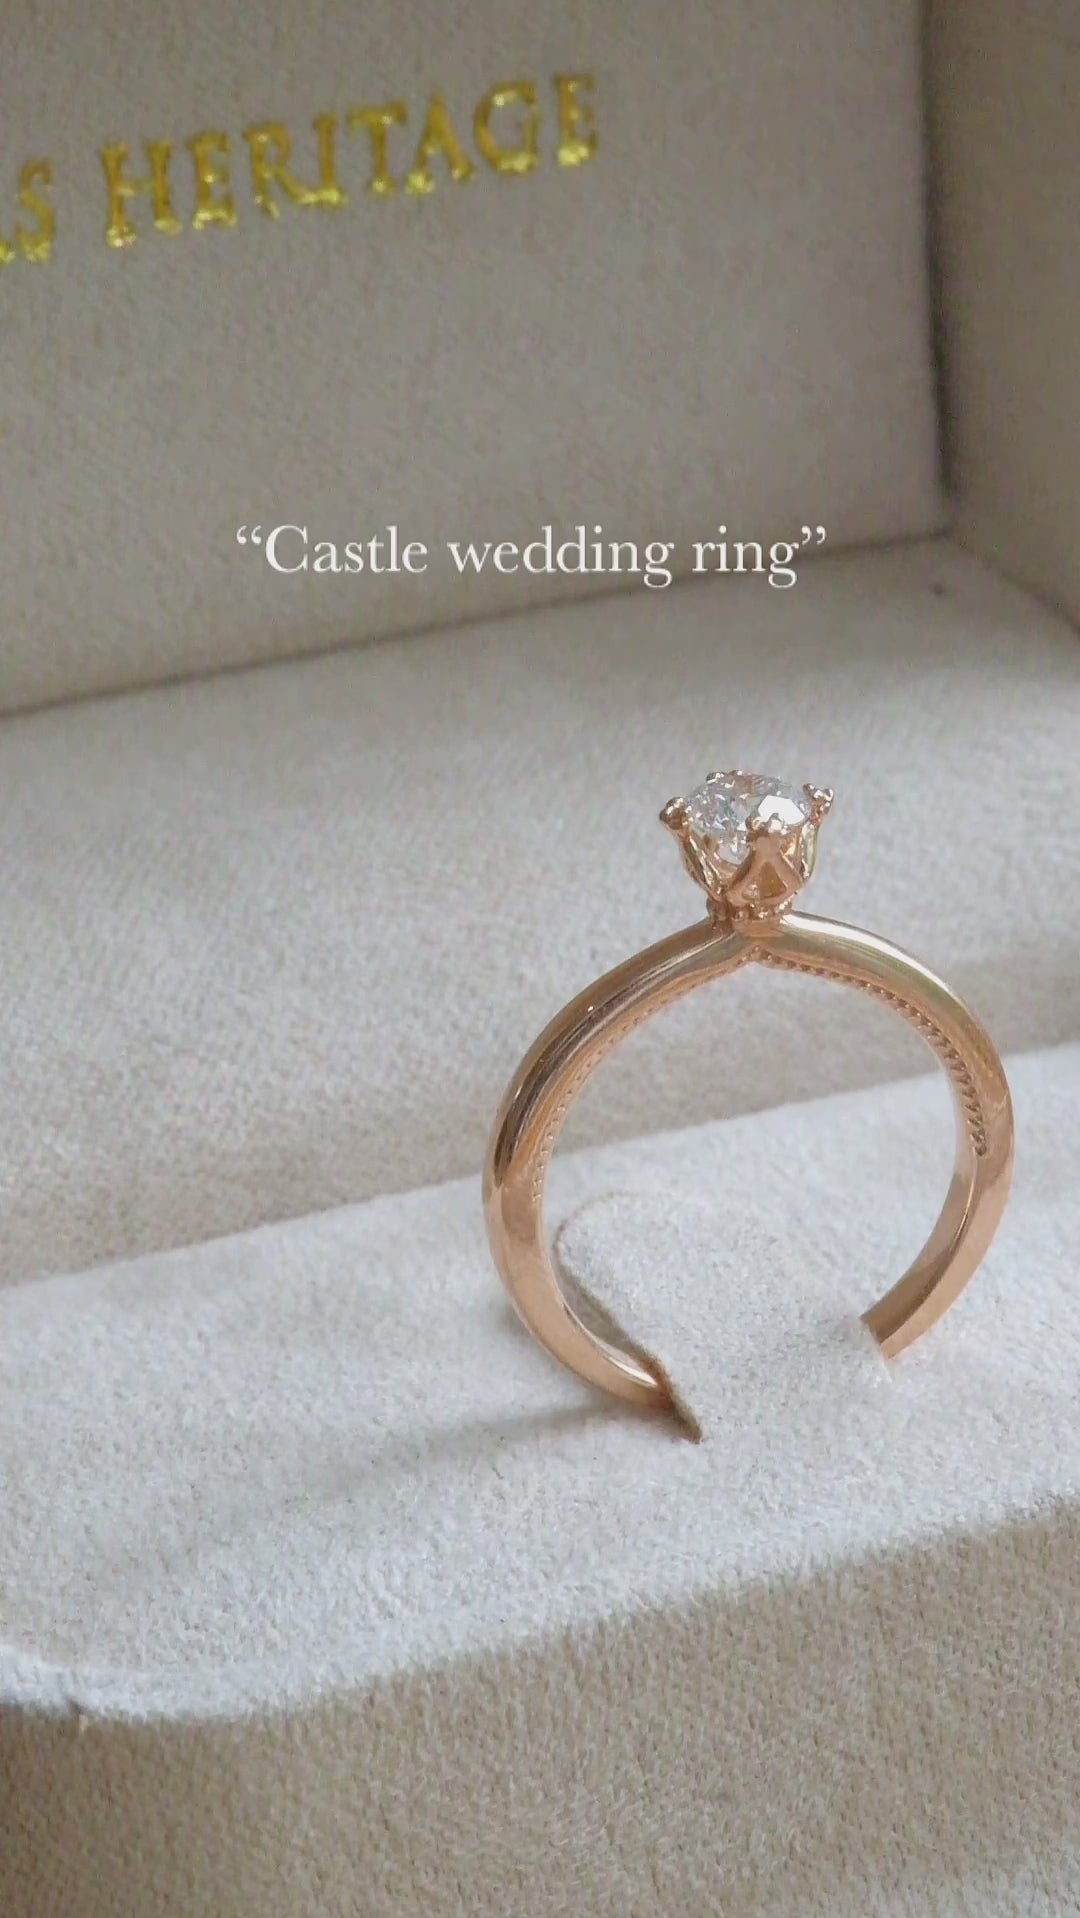 Castle wedding ring (rpg513)